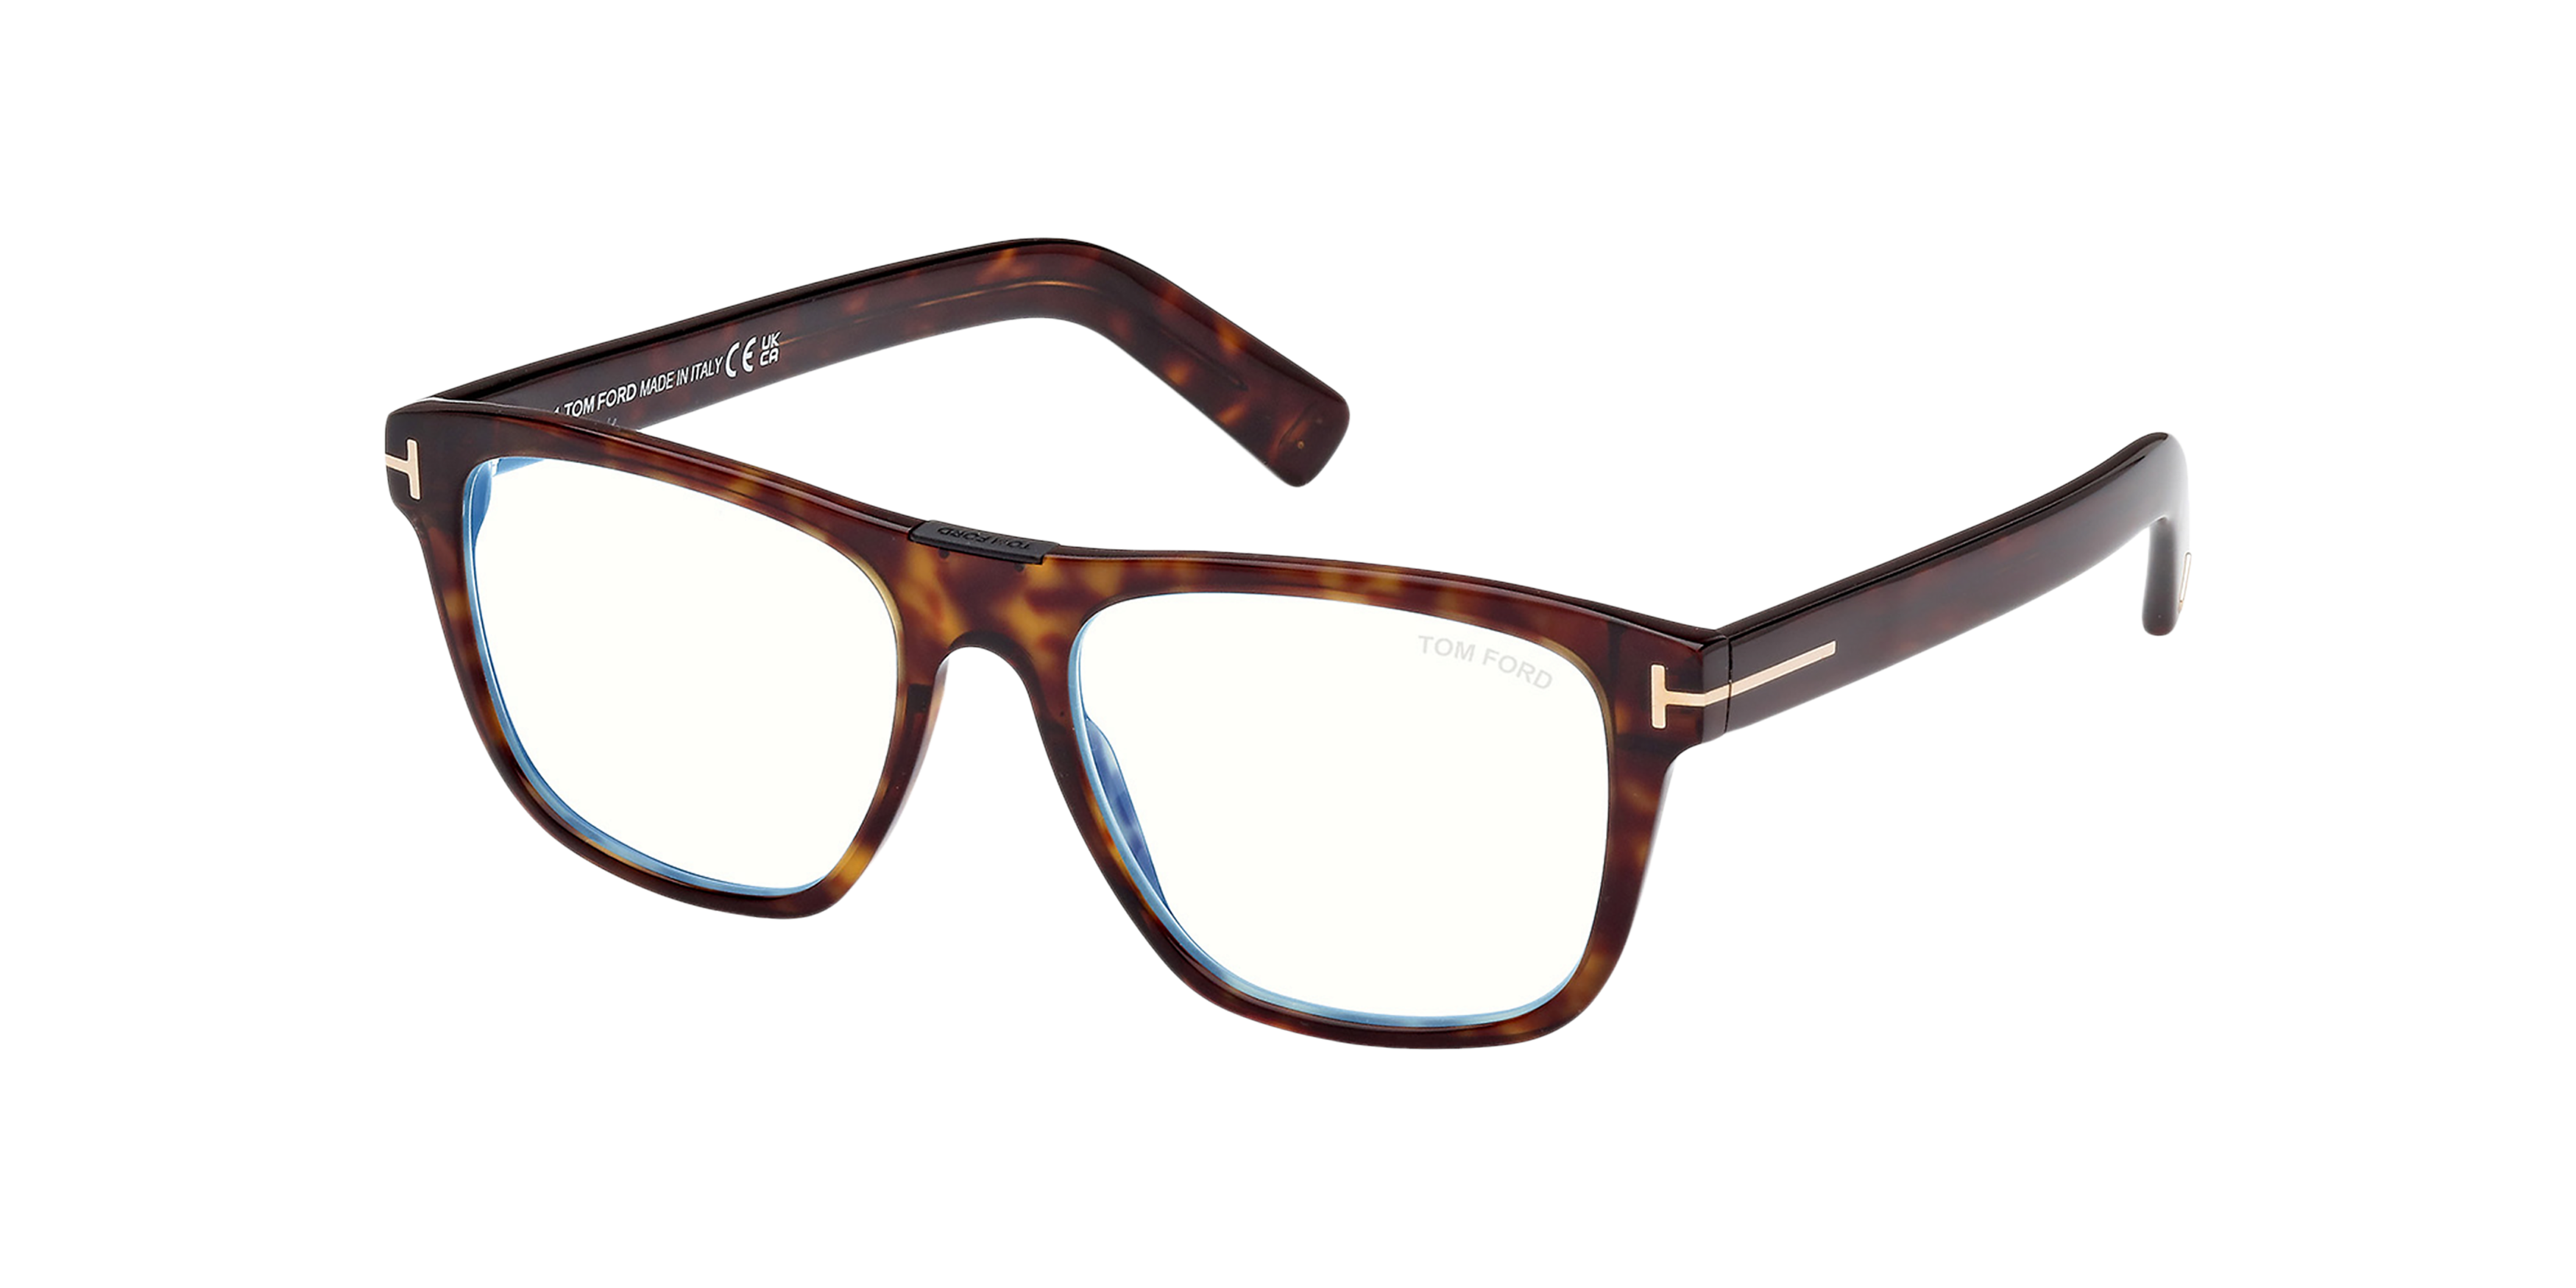 Angle_Left01 Tom Ford FT 5902-B Glasses Transparent / Havana